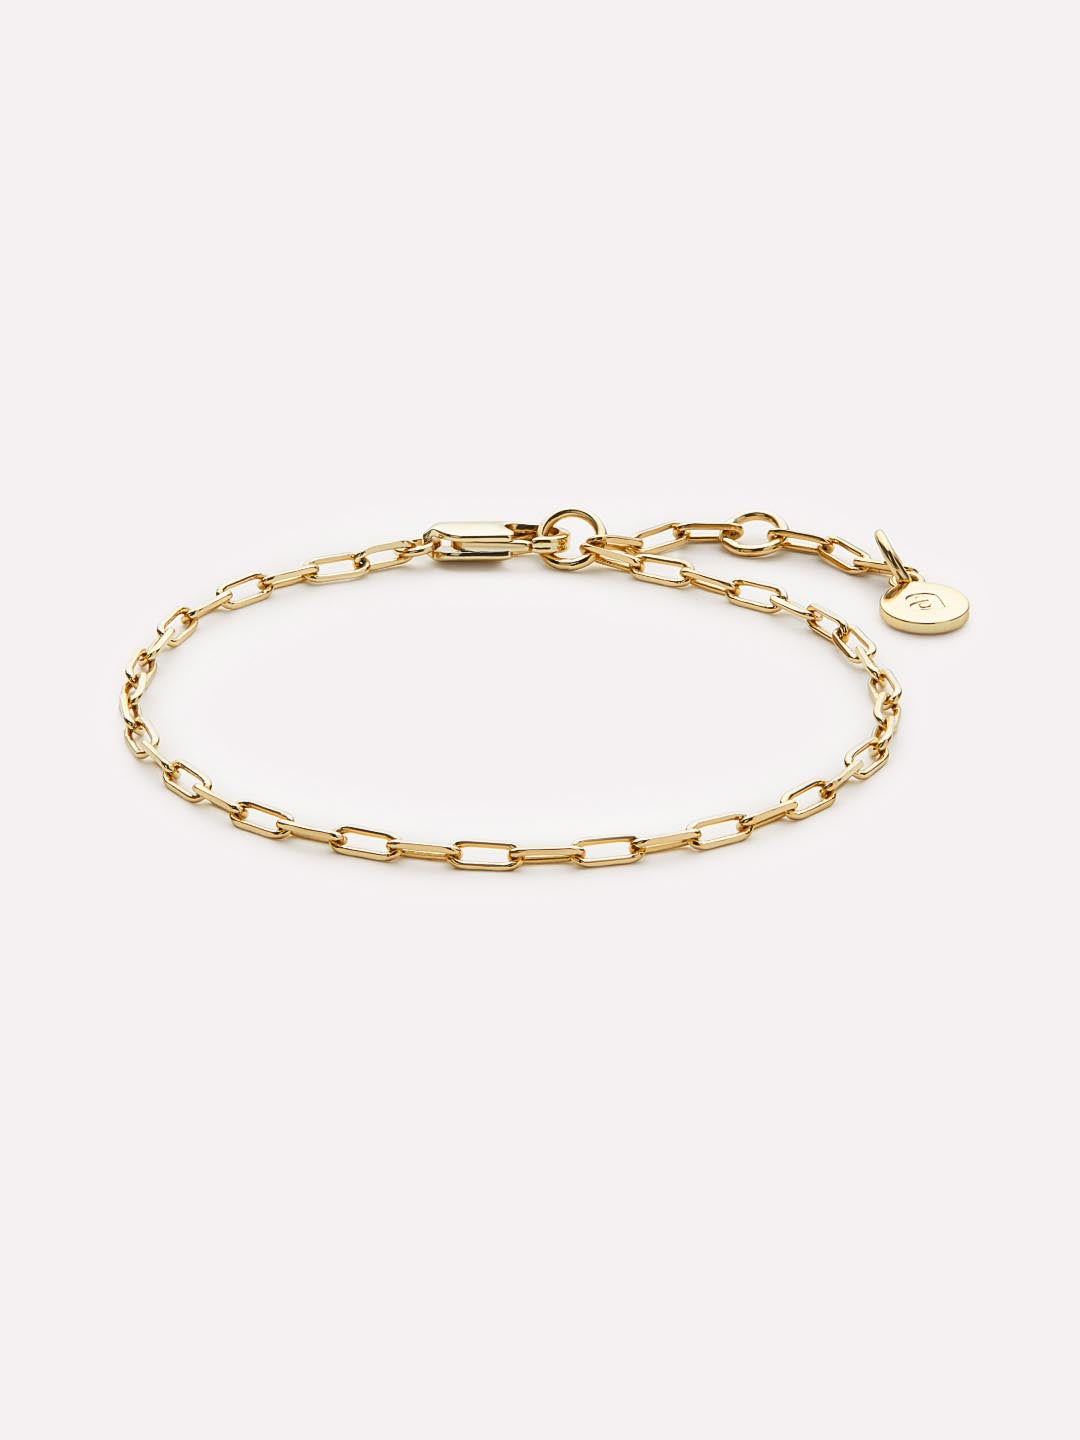 14K Gold Link Chain Bracelet - Poetry Slim - Ana Luisa Jewelry - Mother's Day Bracelets